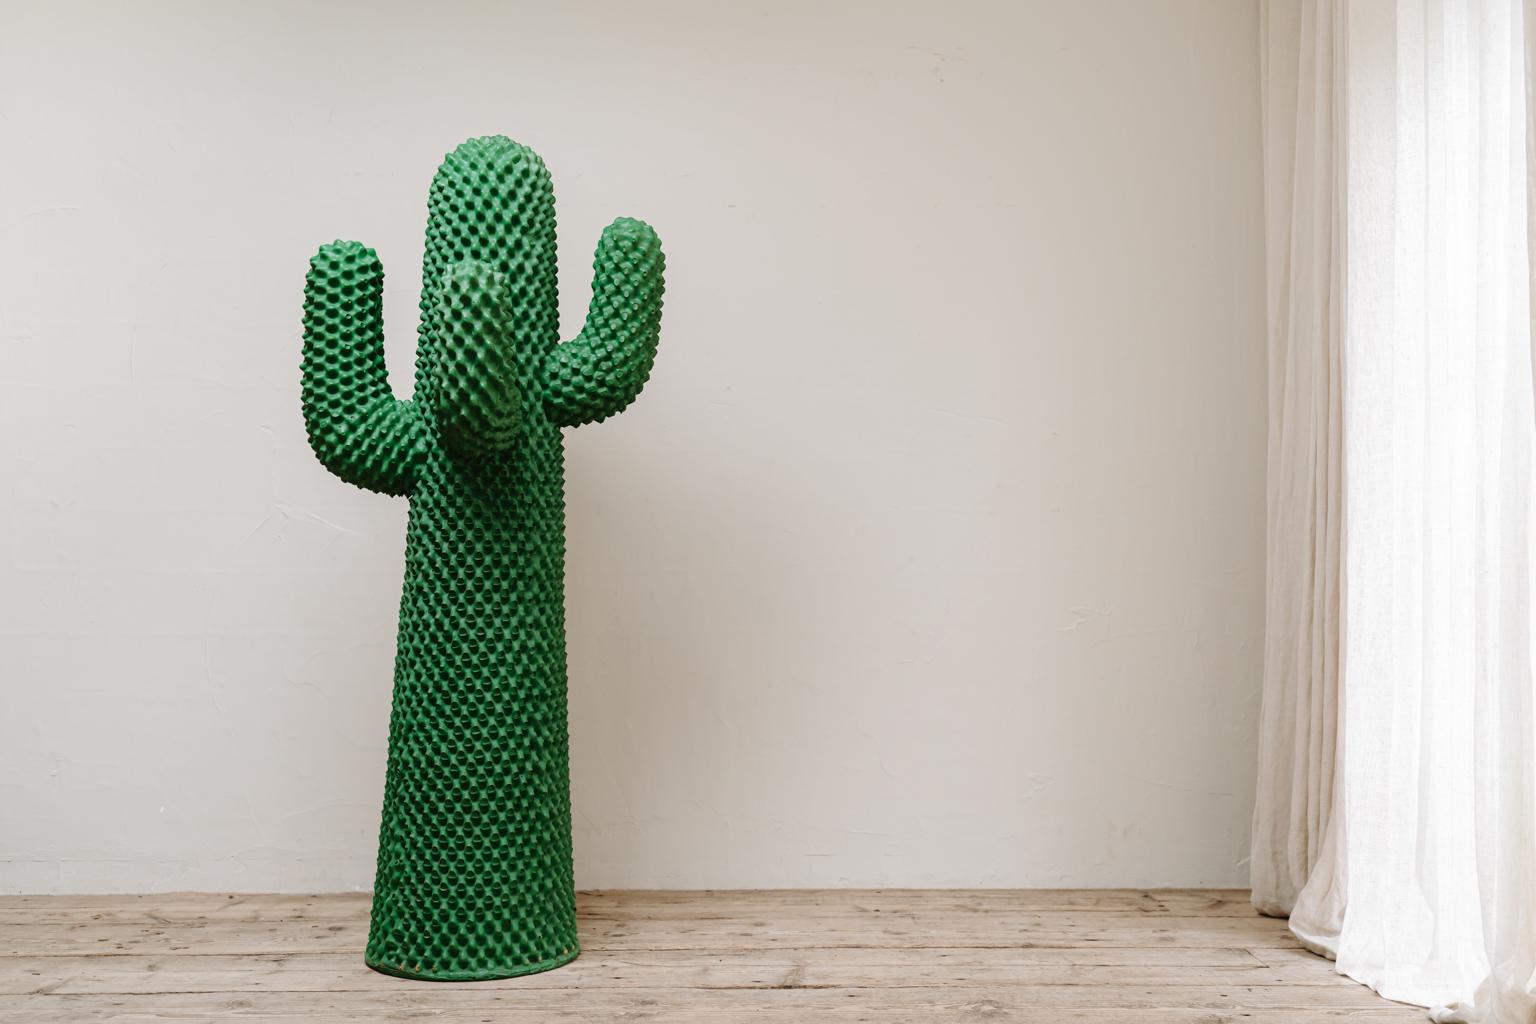 20th Century Cactus by Guido Drocco and Franco Mello for Gufram